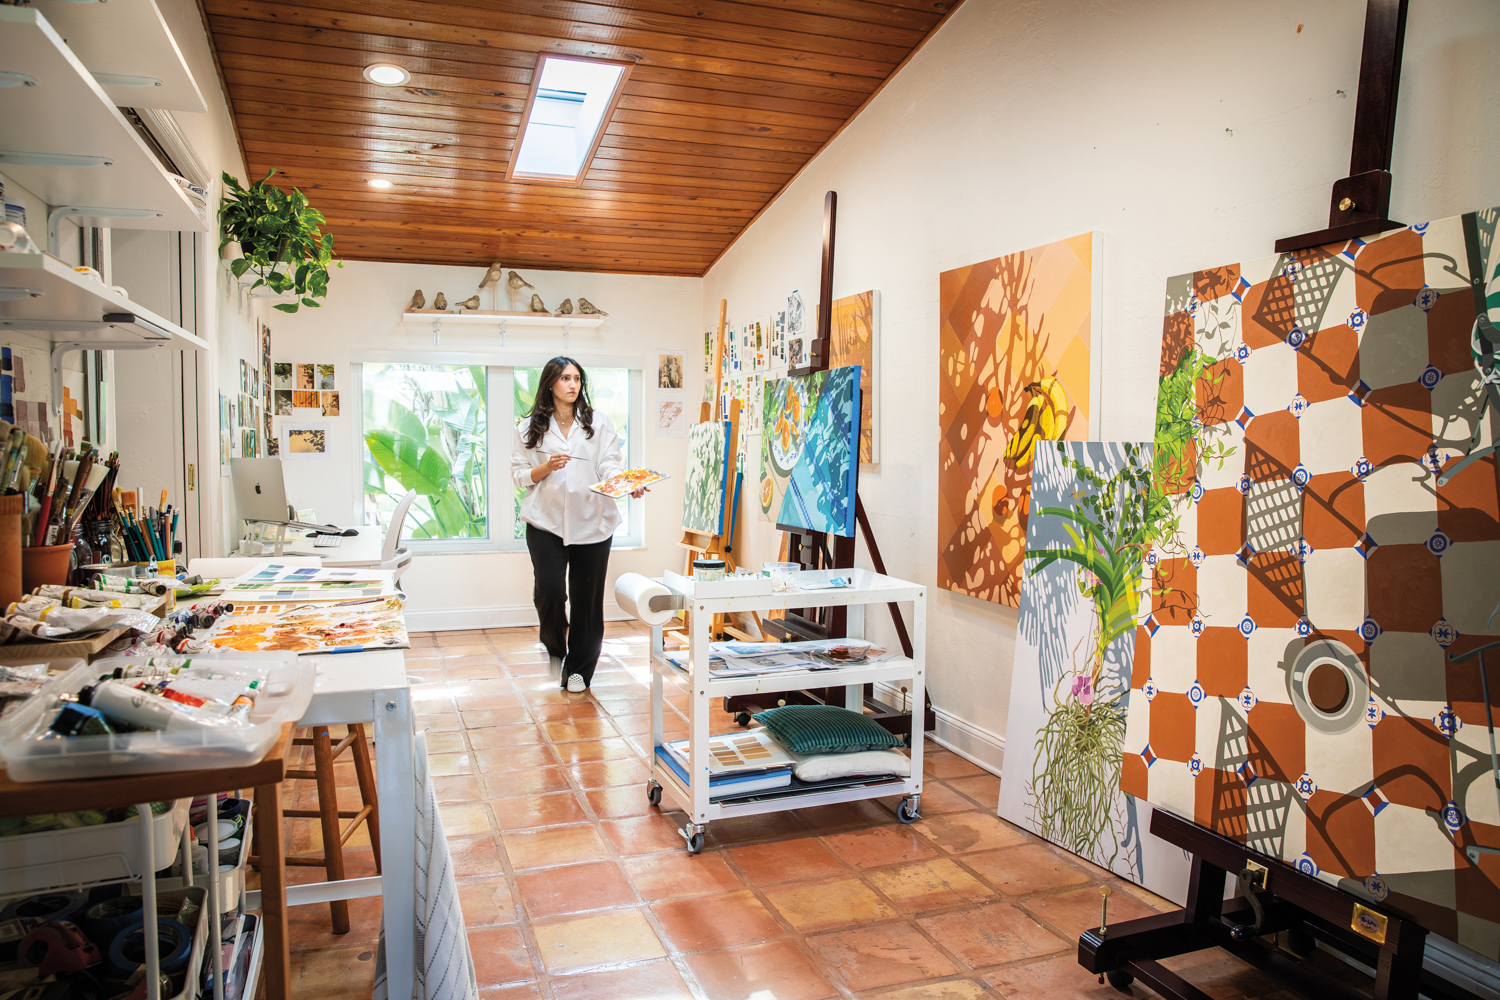 artist natalia juncadella walks towards her oil paintings in her home studio